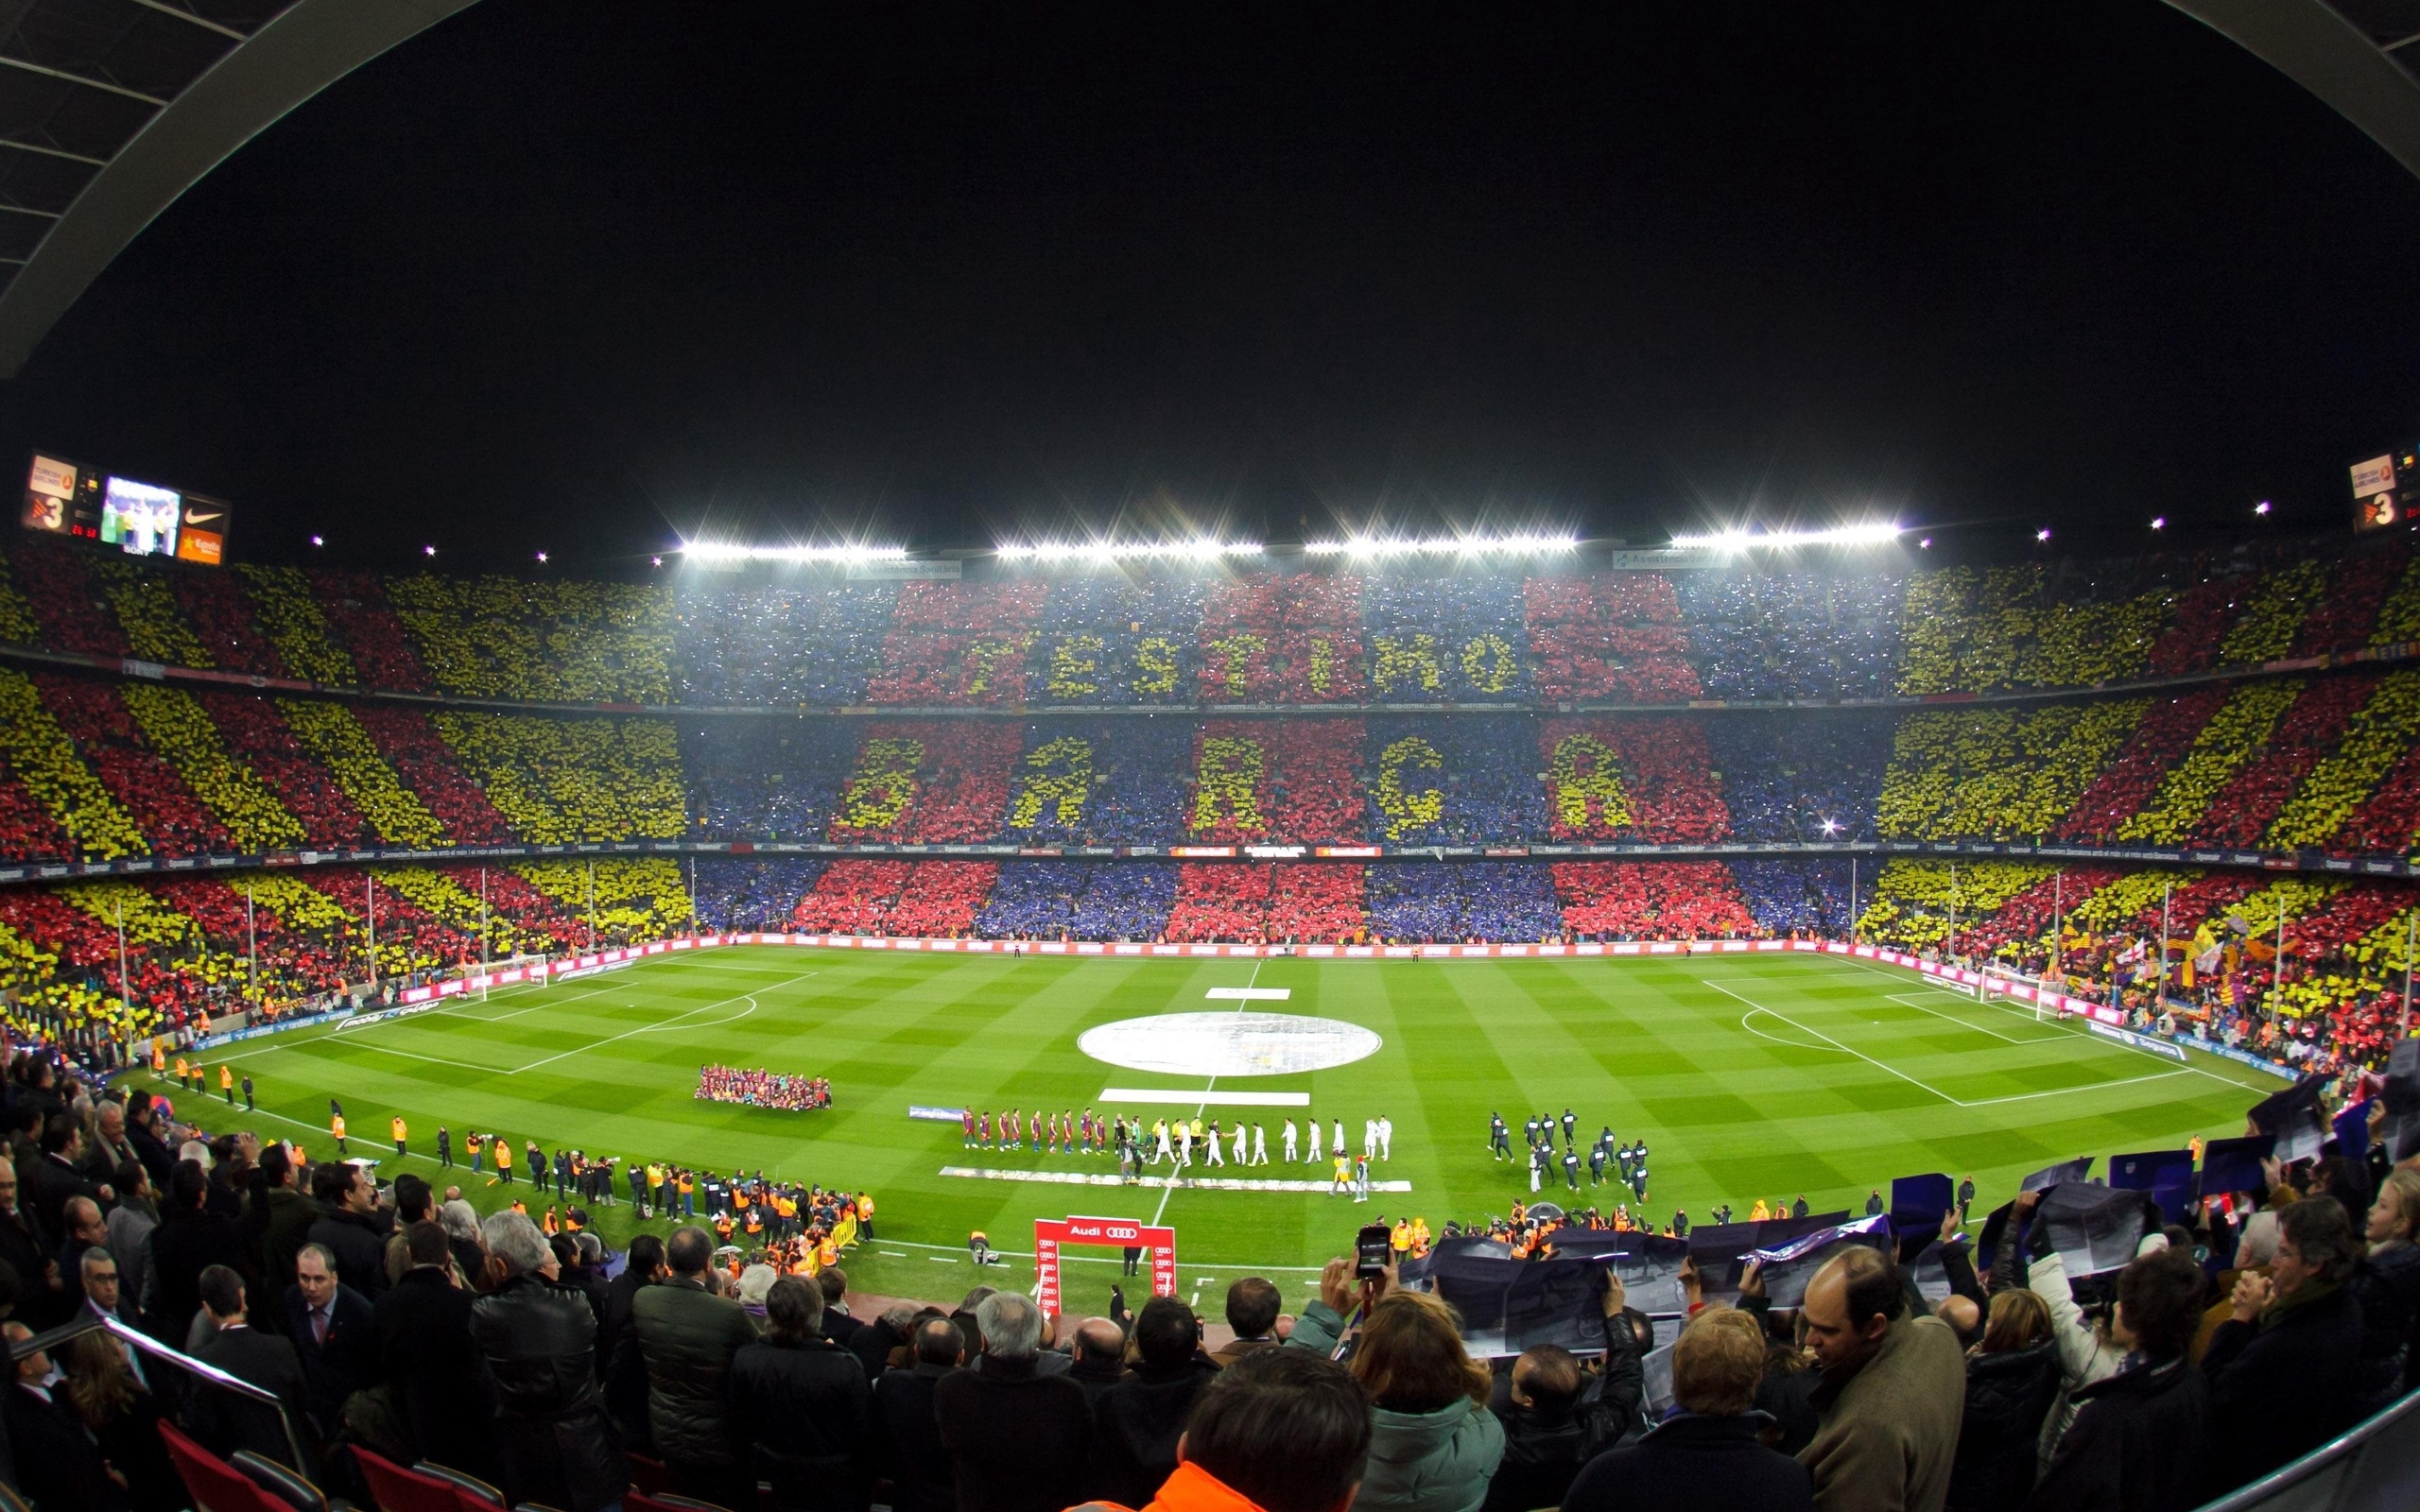 barcelona camp nou stadium